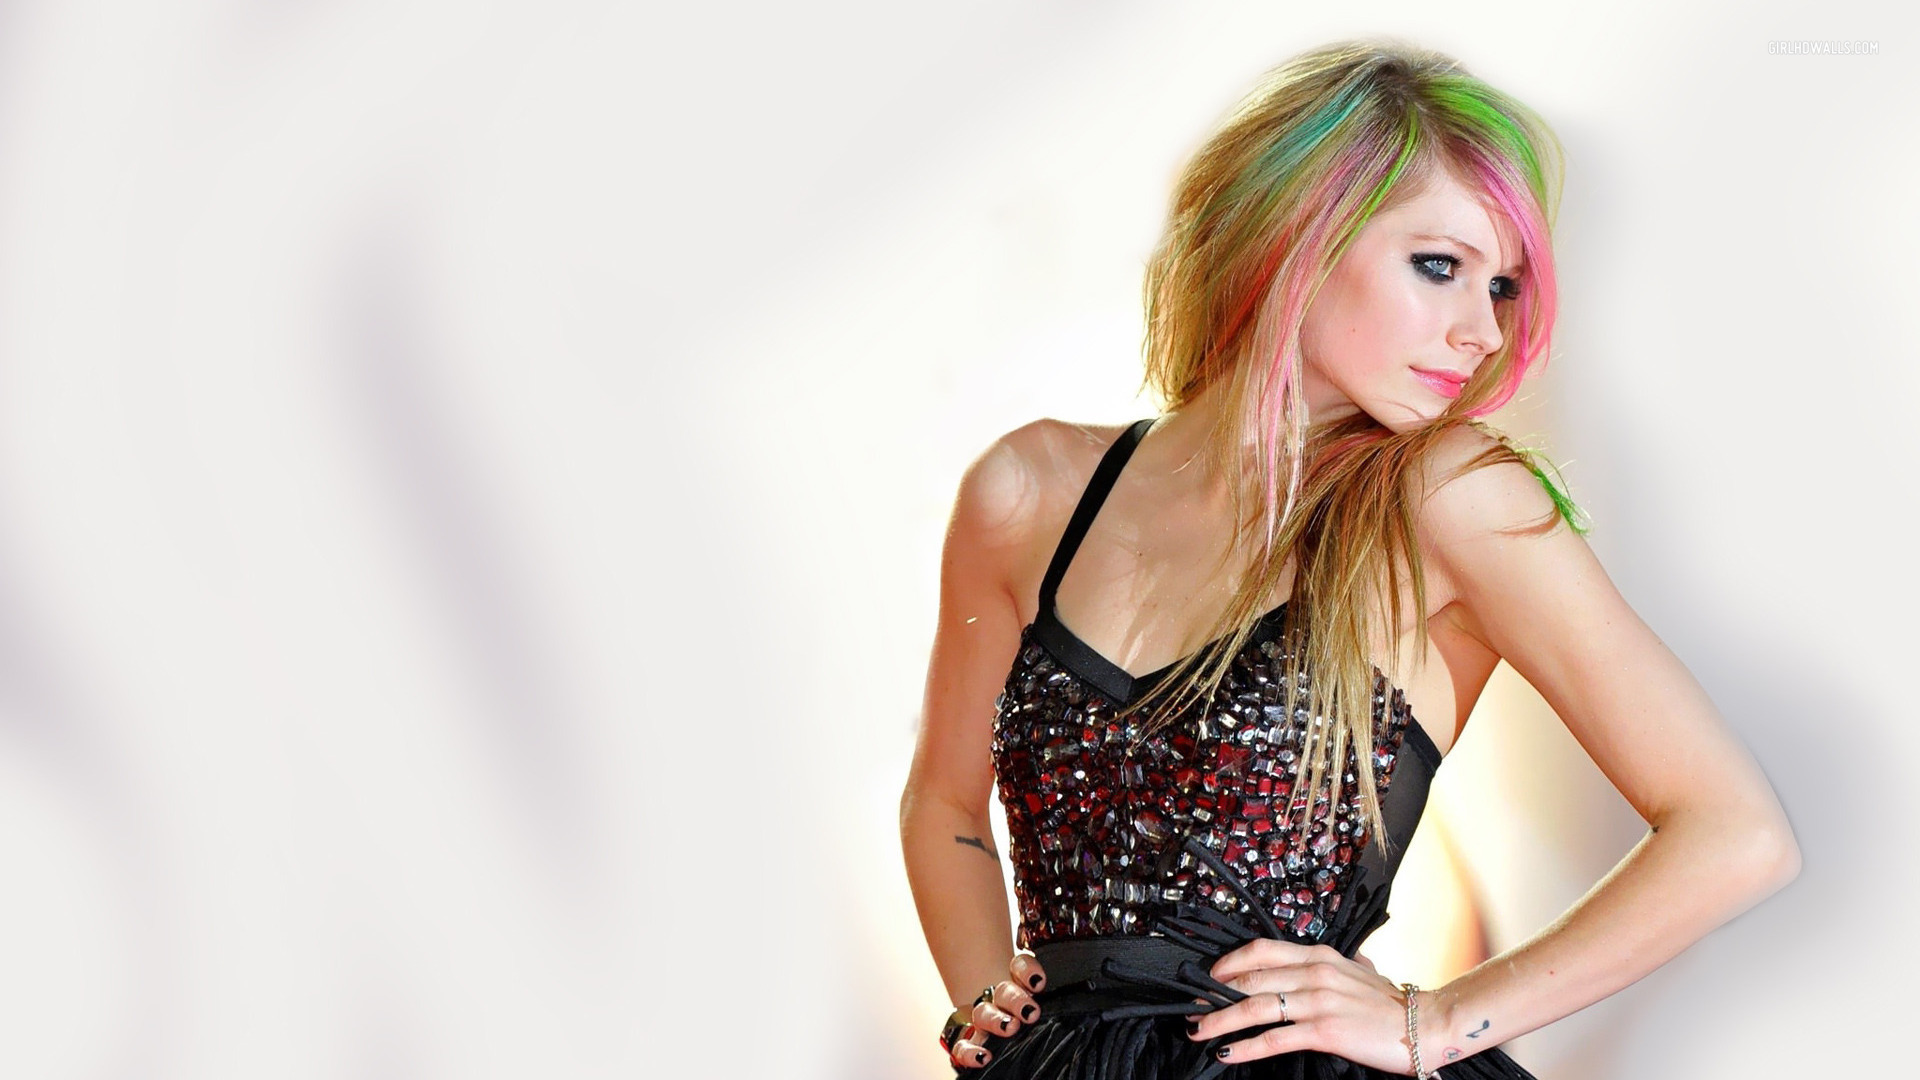 Avril Lavigne Wallpaper Pictures Image